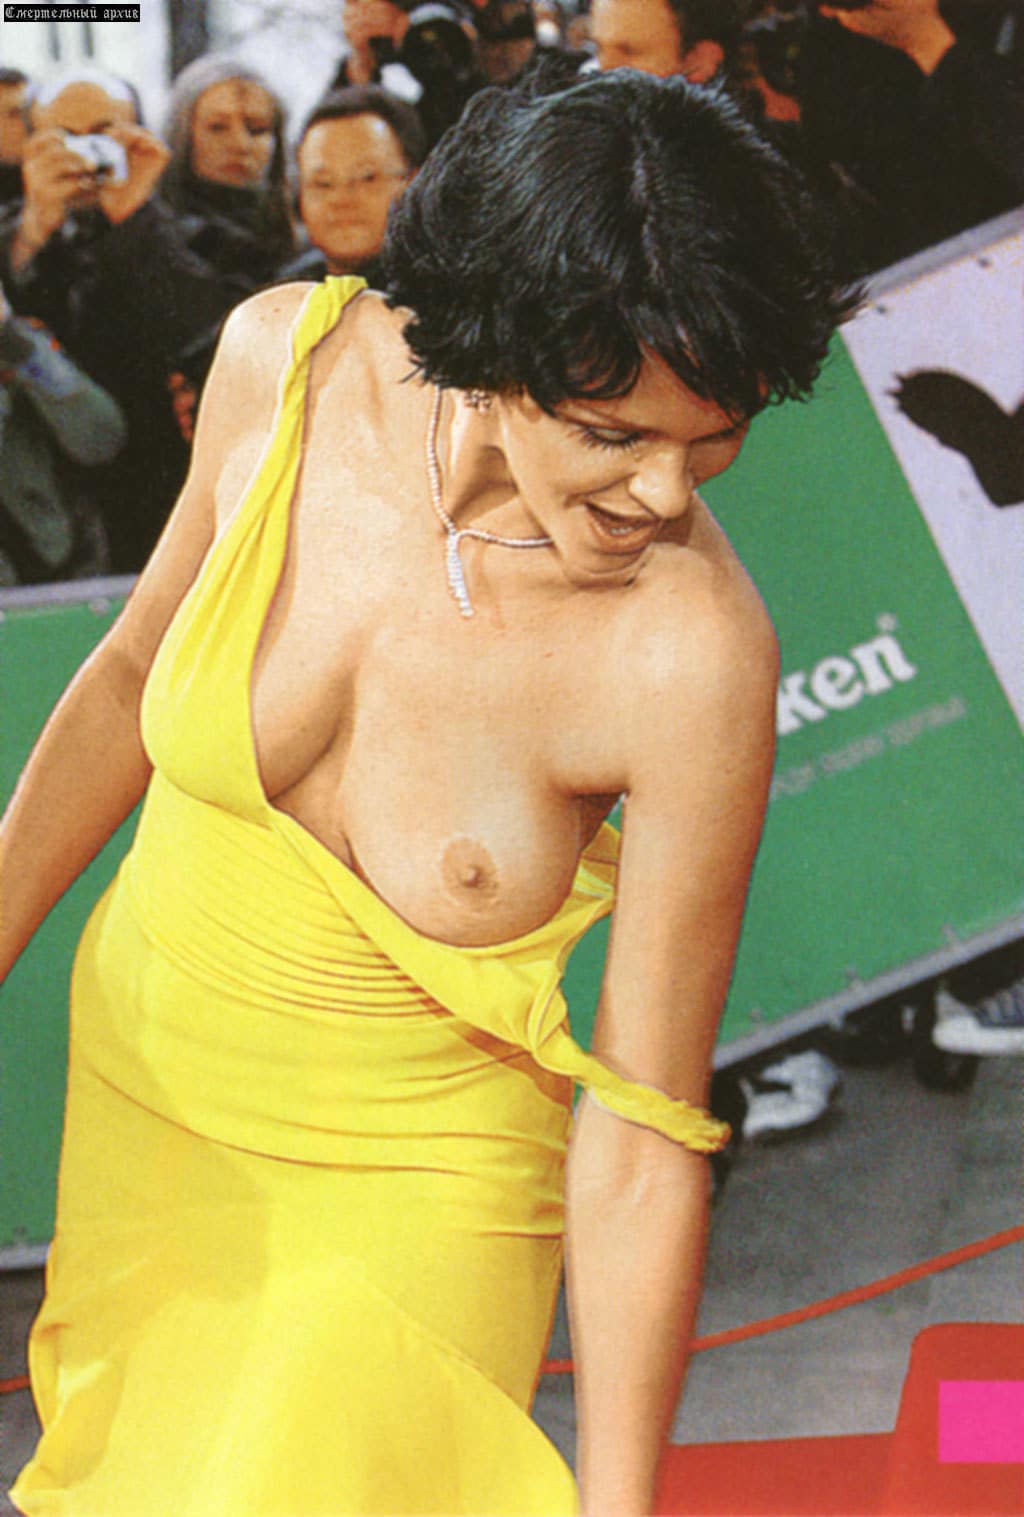 public flashing nude celebrity nip slip mature hotwife boobs flash accidental flash slipped nipple on the red carpet